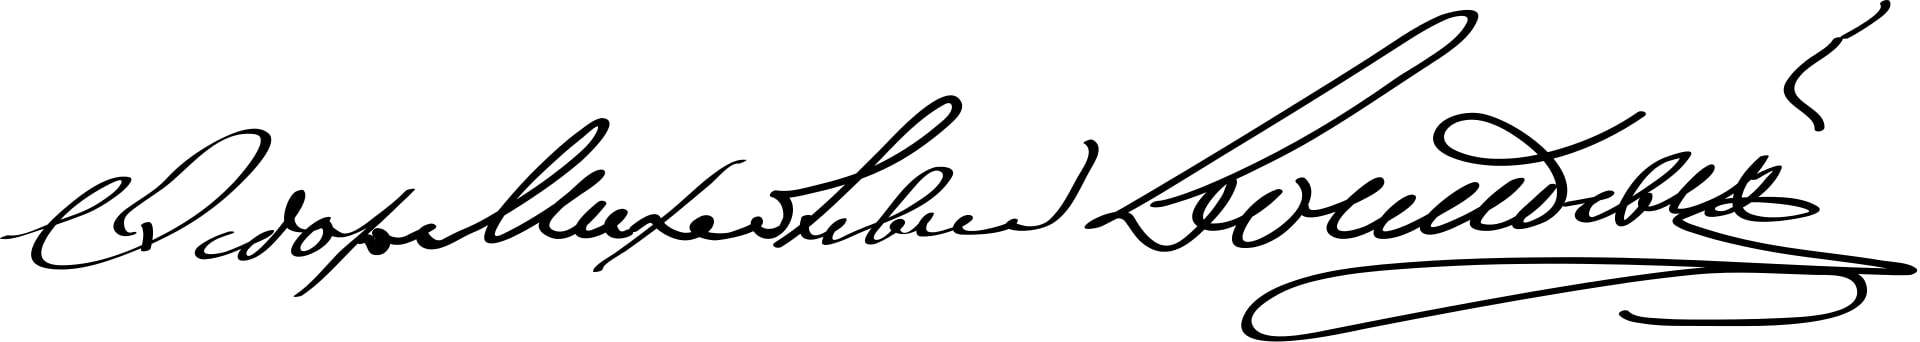 Fyodor Dostoevsky Signature